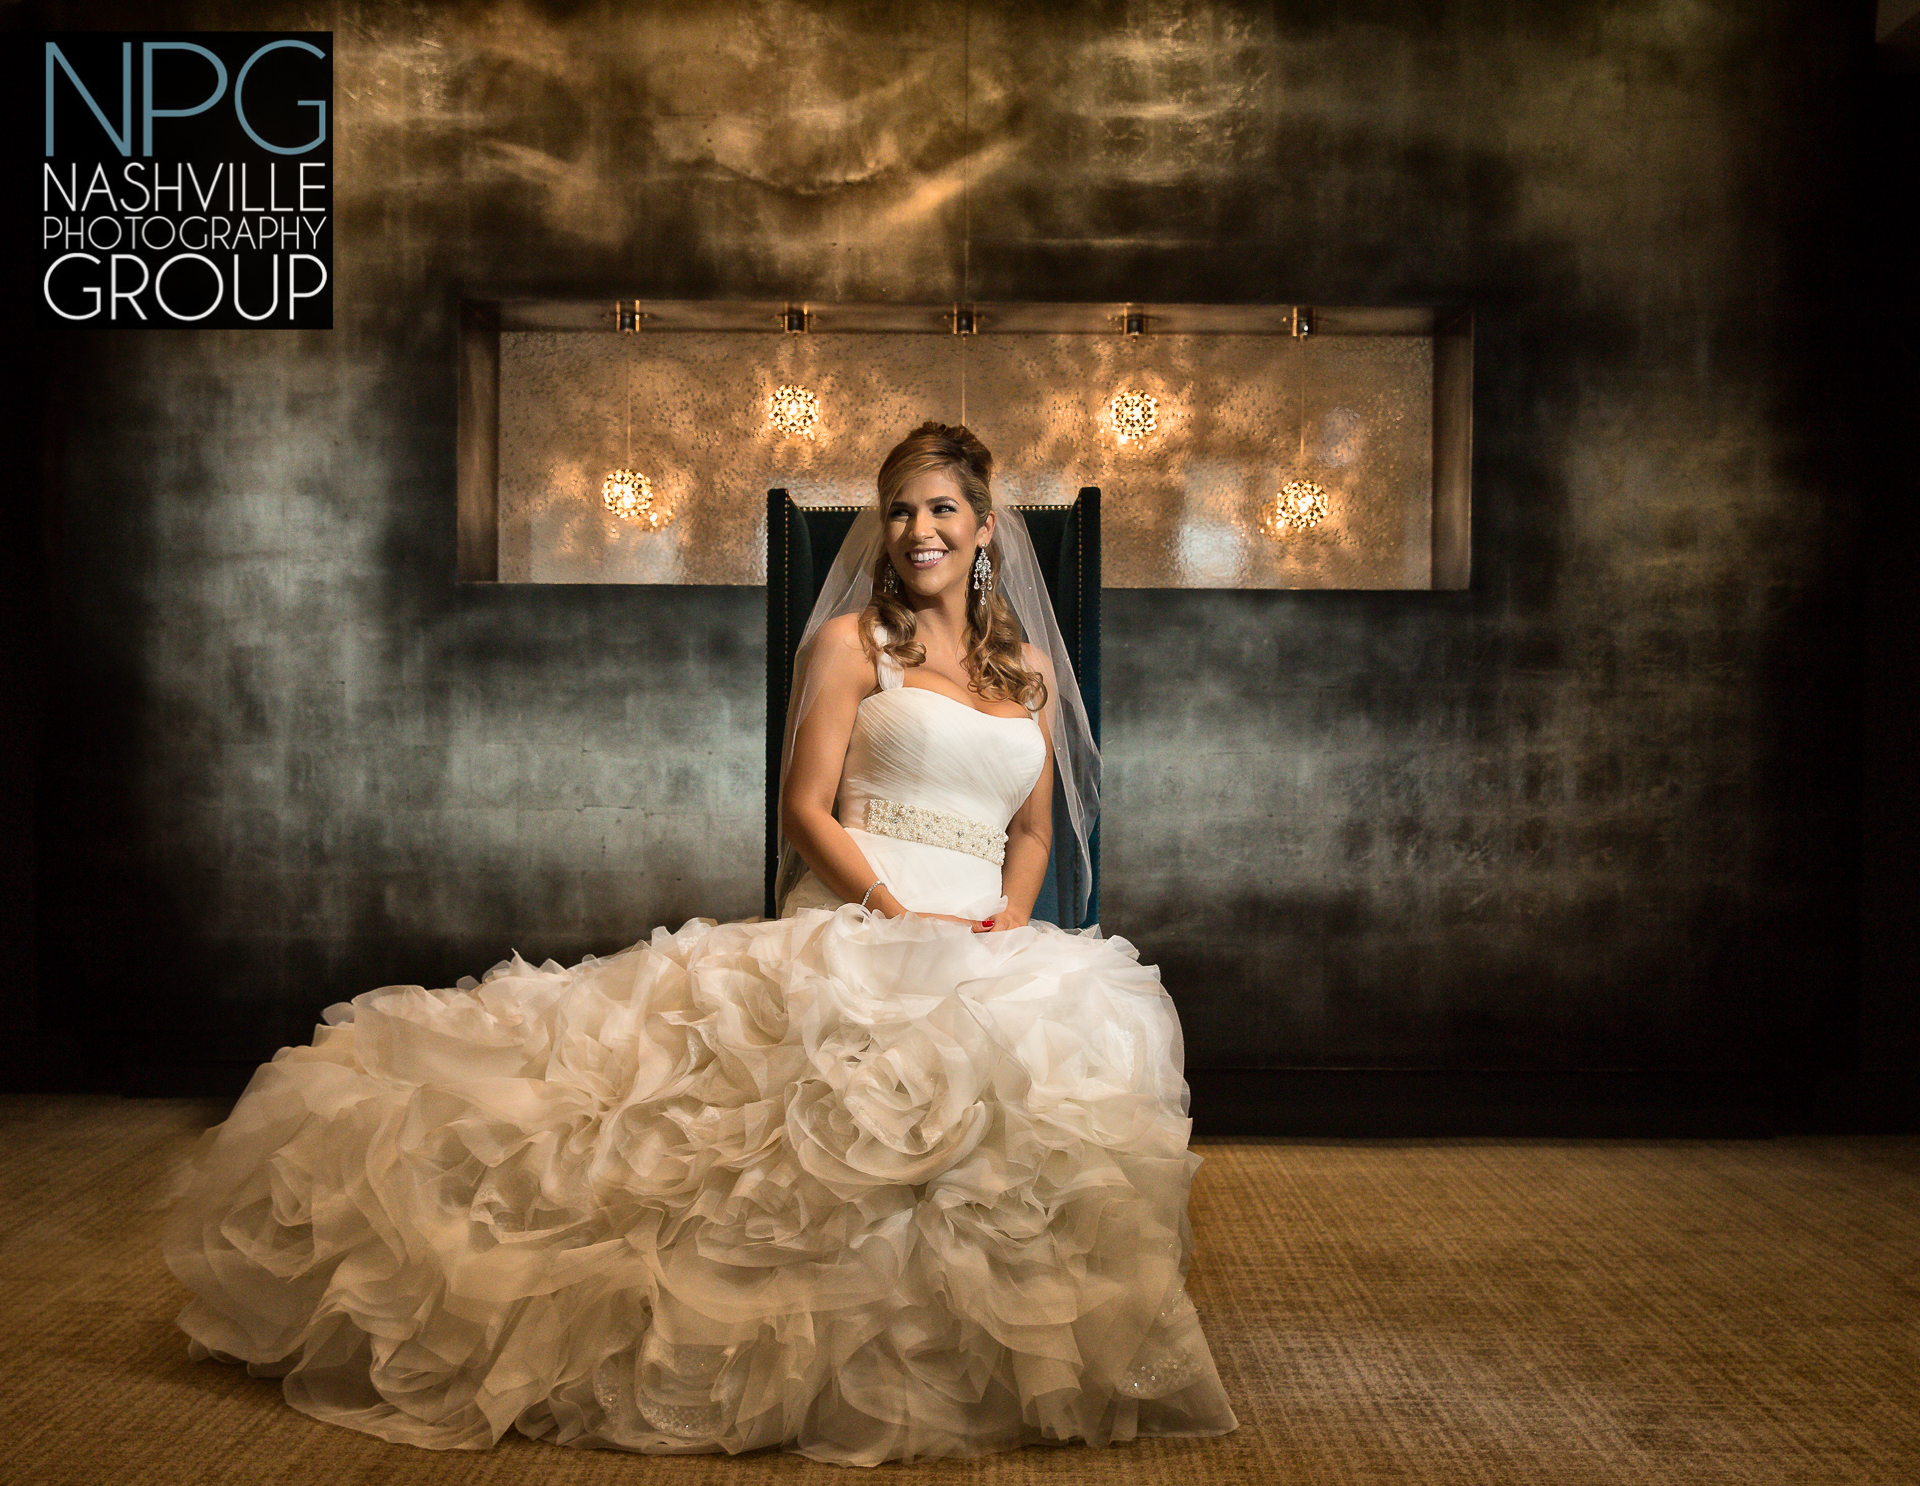 Nashville Photography Group wedding photographer-1.jpg